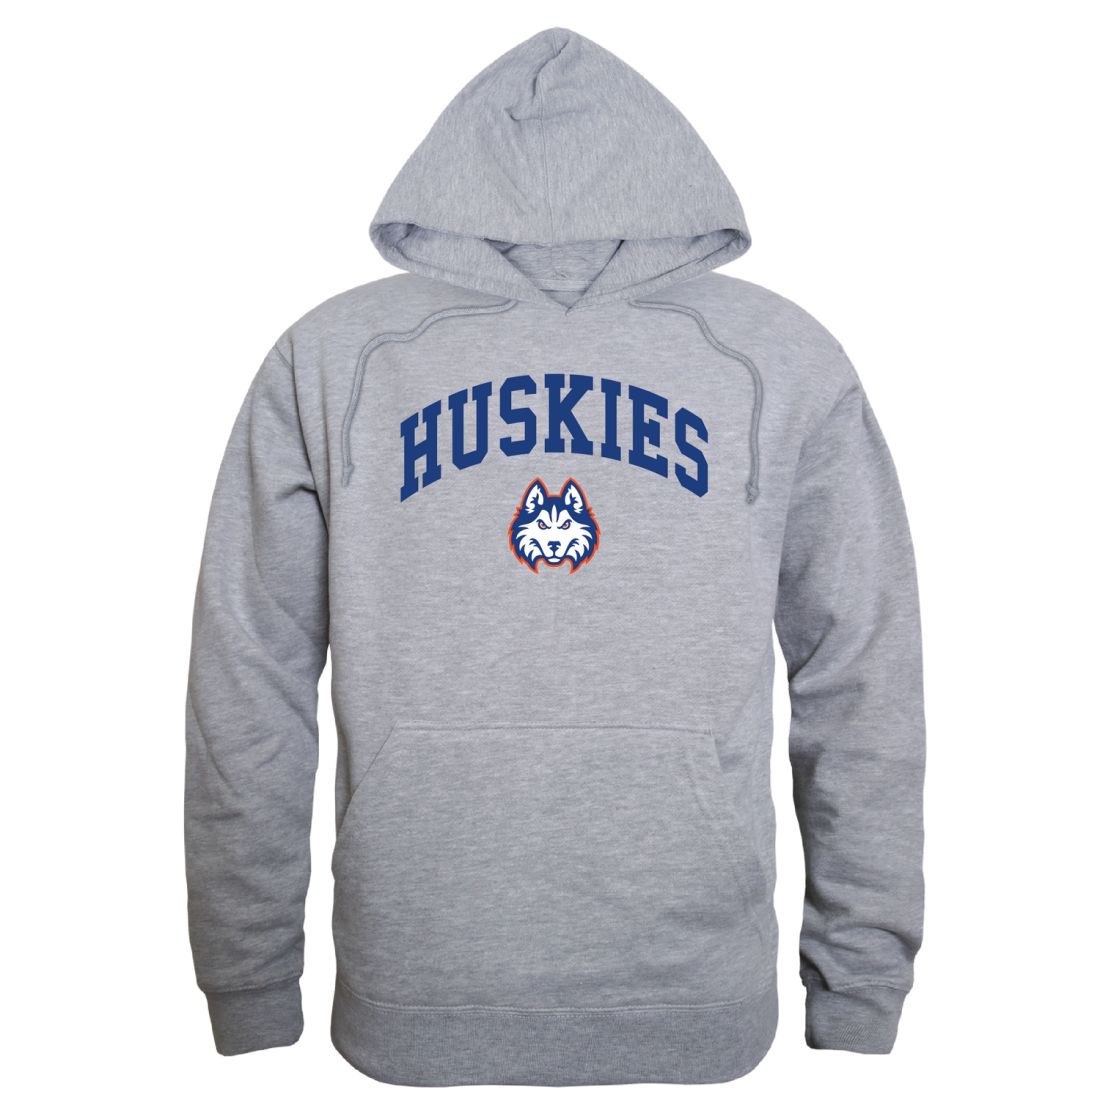 Houston Baptist University Huskies Campus Fleece Hoodie Sweatshirts